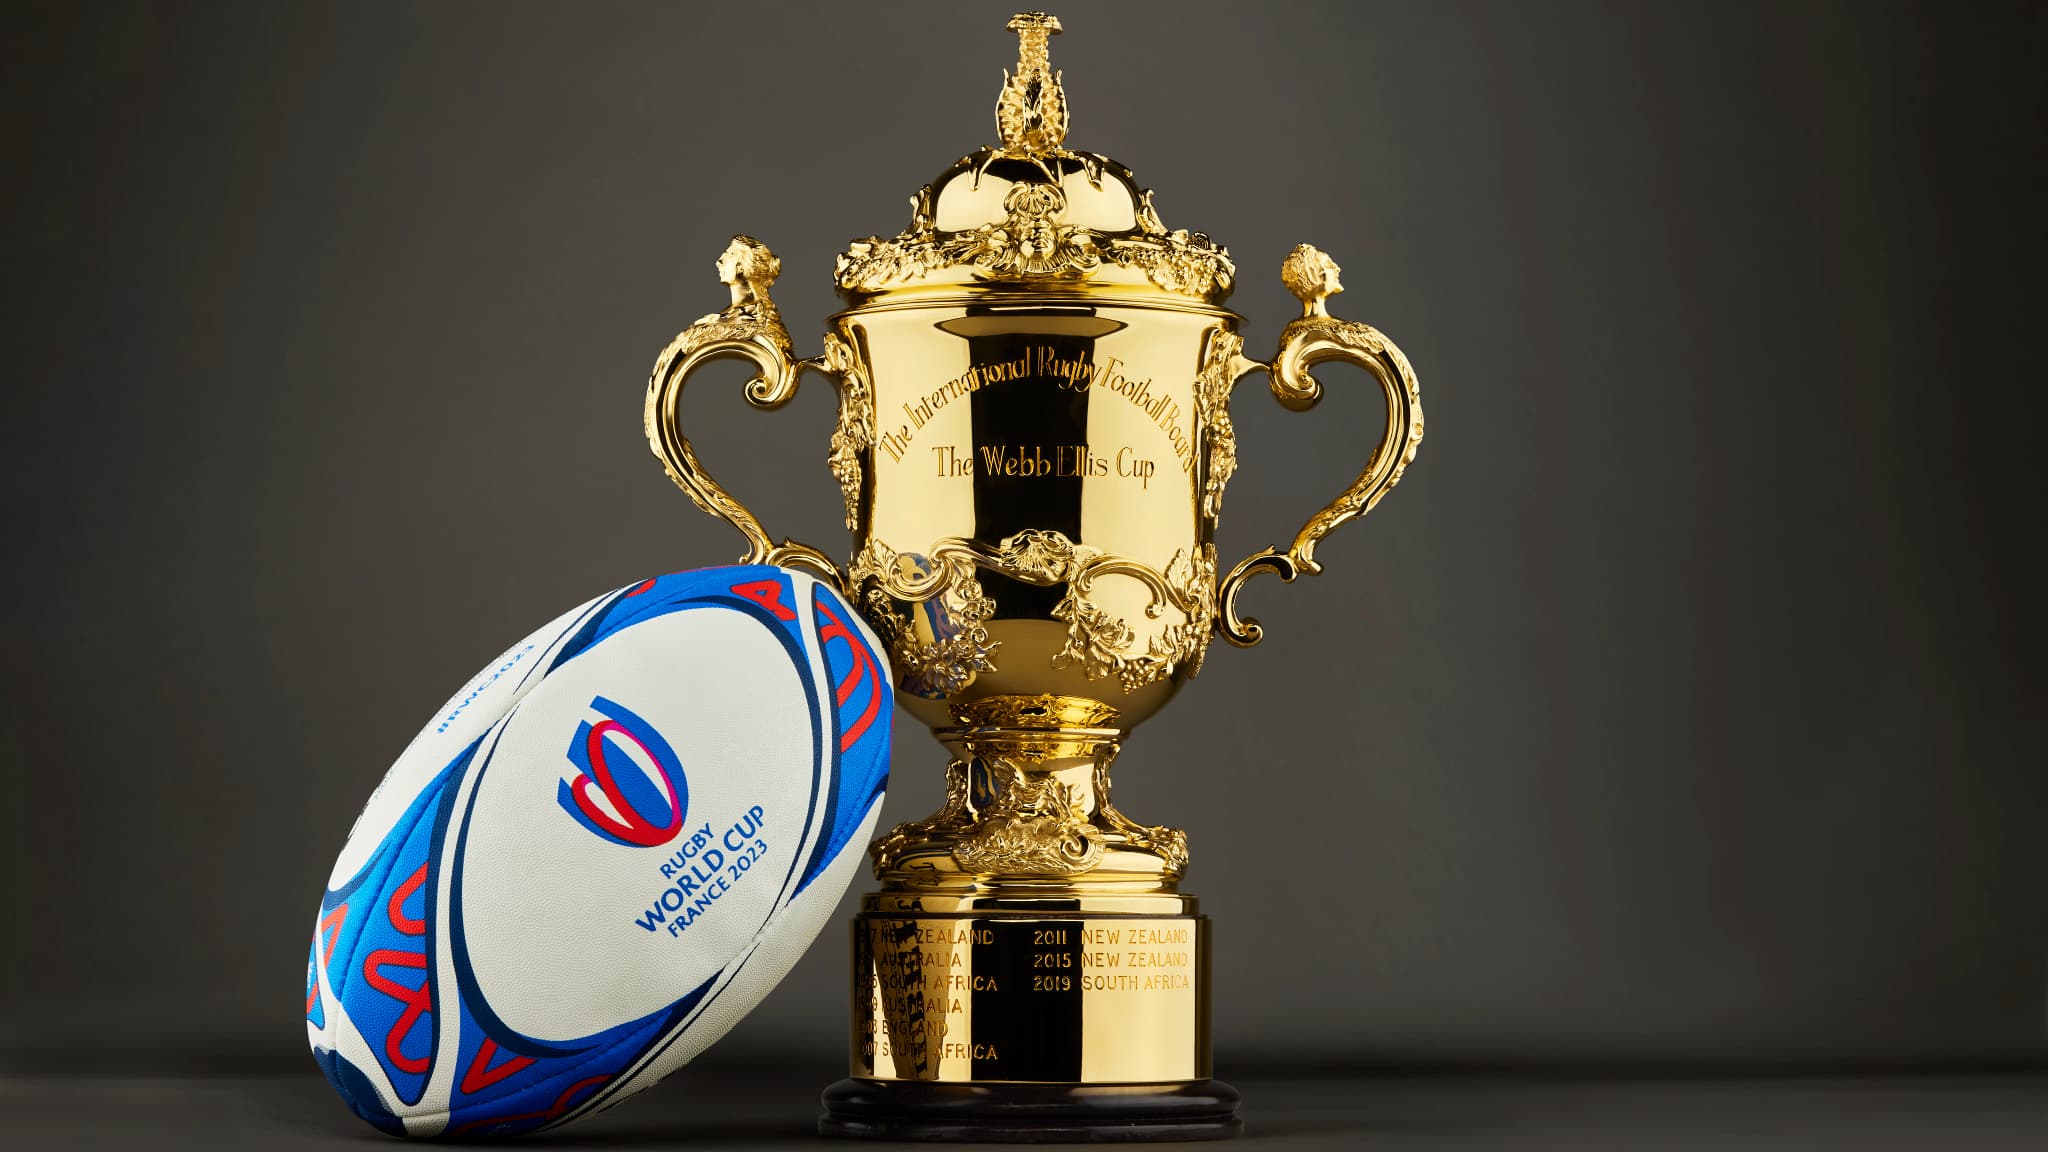 La-Webb-El​lis-Cup-tr​ophee-de-l​a-Coupe-du​-monde-de-​rugby-1674​165